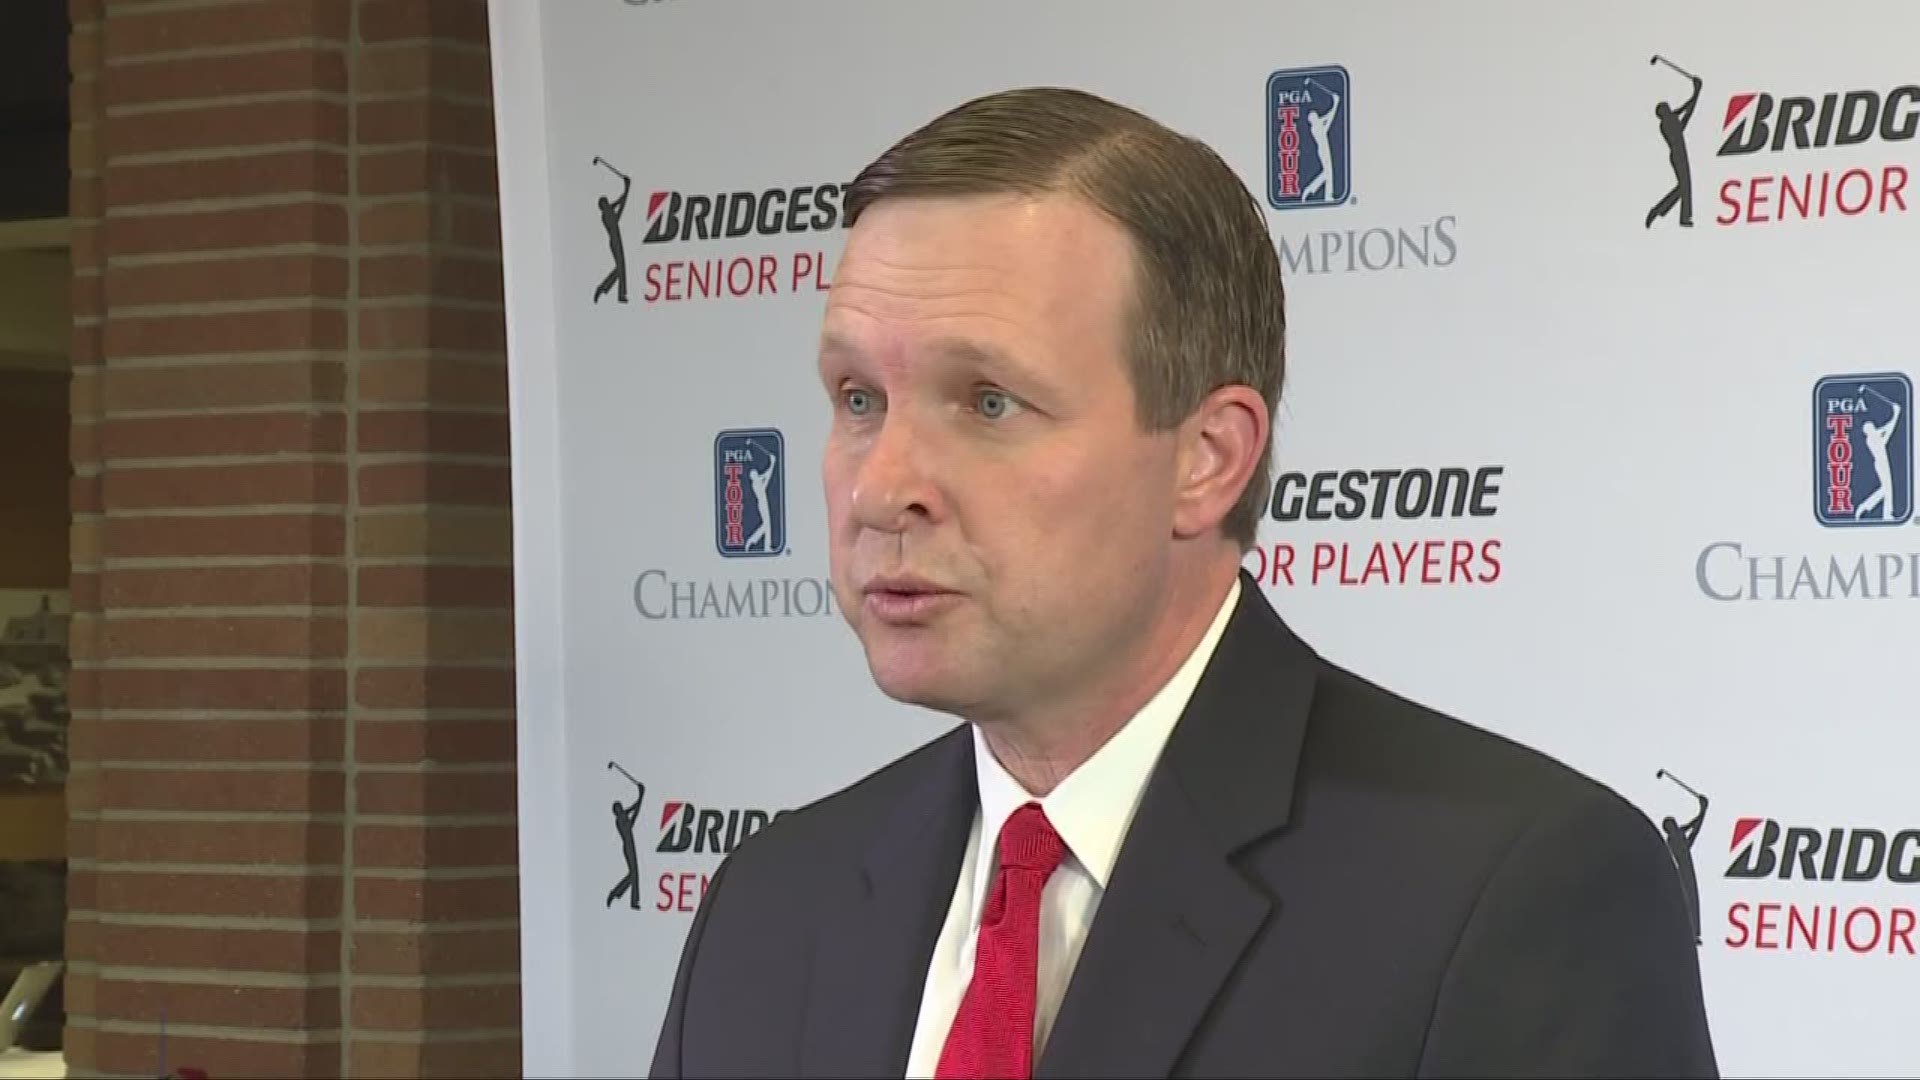 Bridgestone Invitational golf championship leaves Akron, replaced by Senior Players event